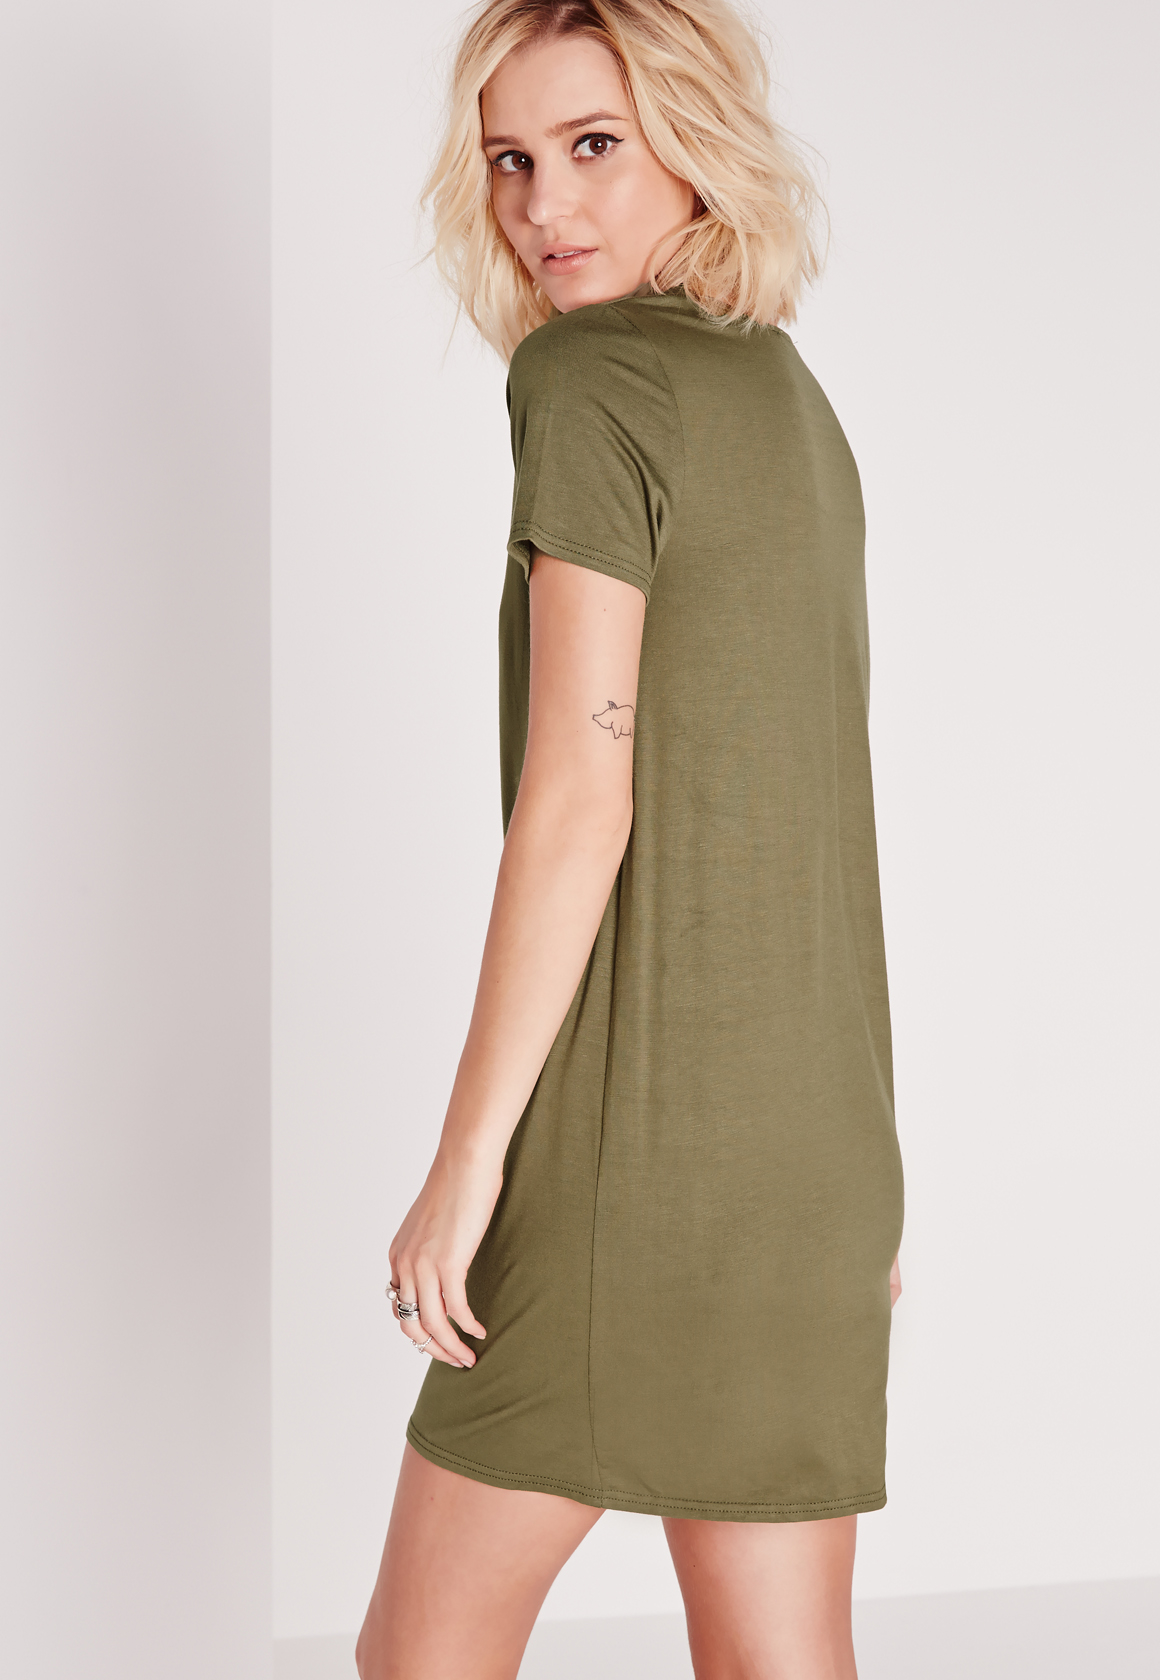 Lyst - Missguided Short Sleeve T-shirt Dress Khaki in Natural